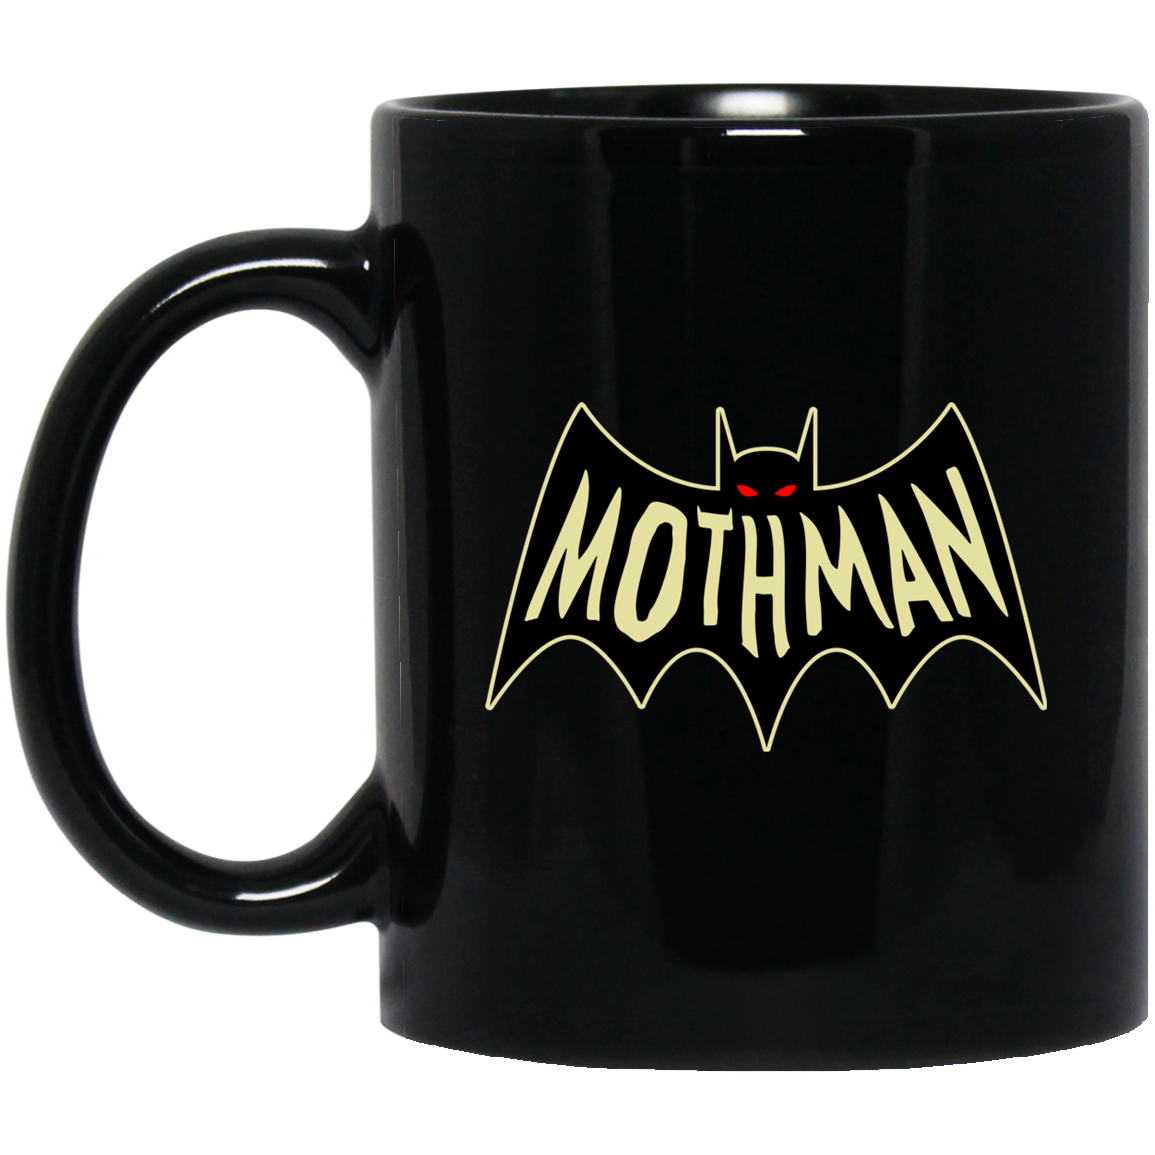 mothman mug, fallout mug, fallout 3 mug, fallout 76 mug, fallout 4 mug,